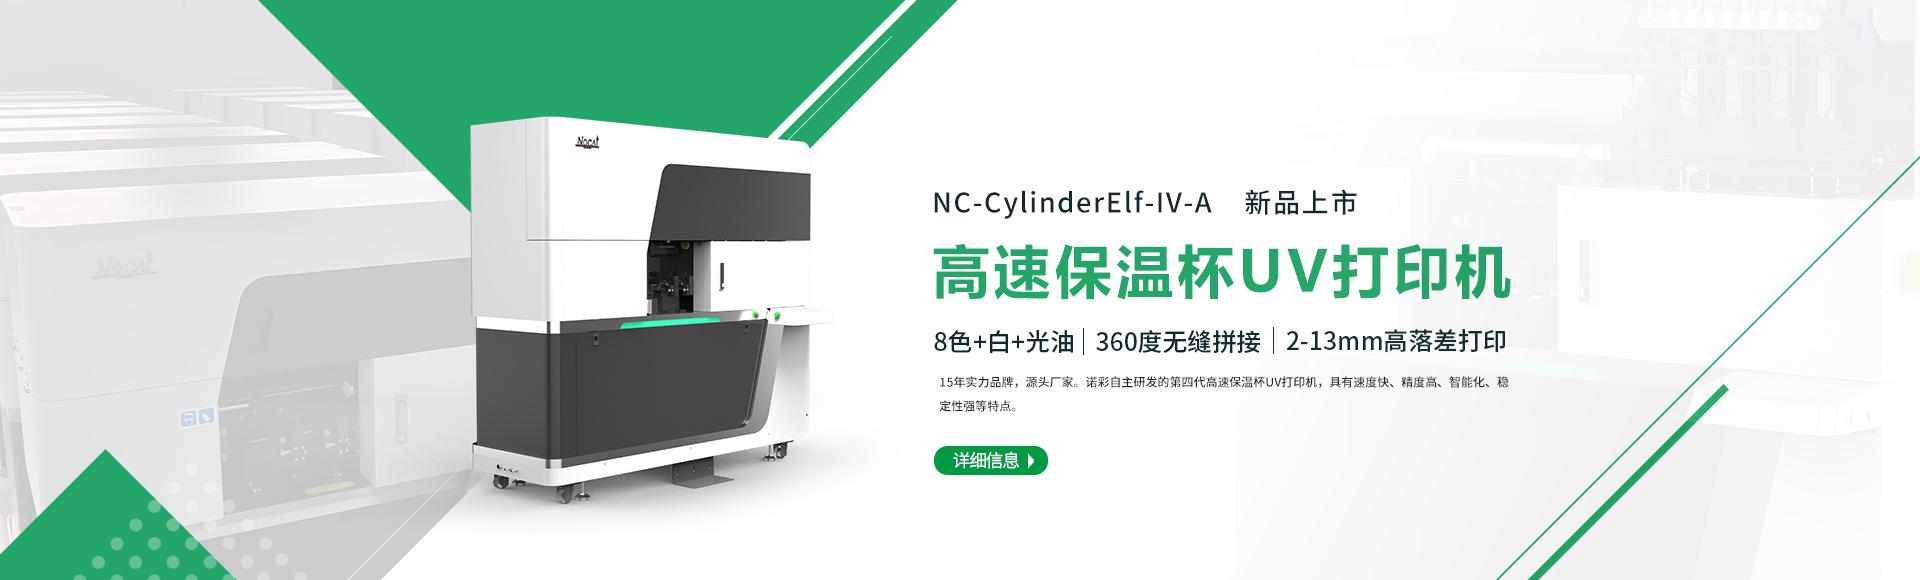 NC-CylinderElf-IV-A